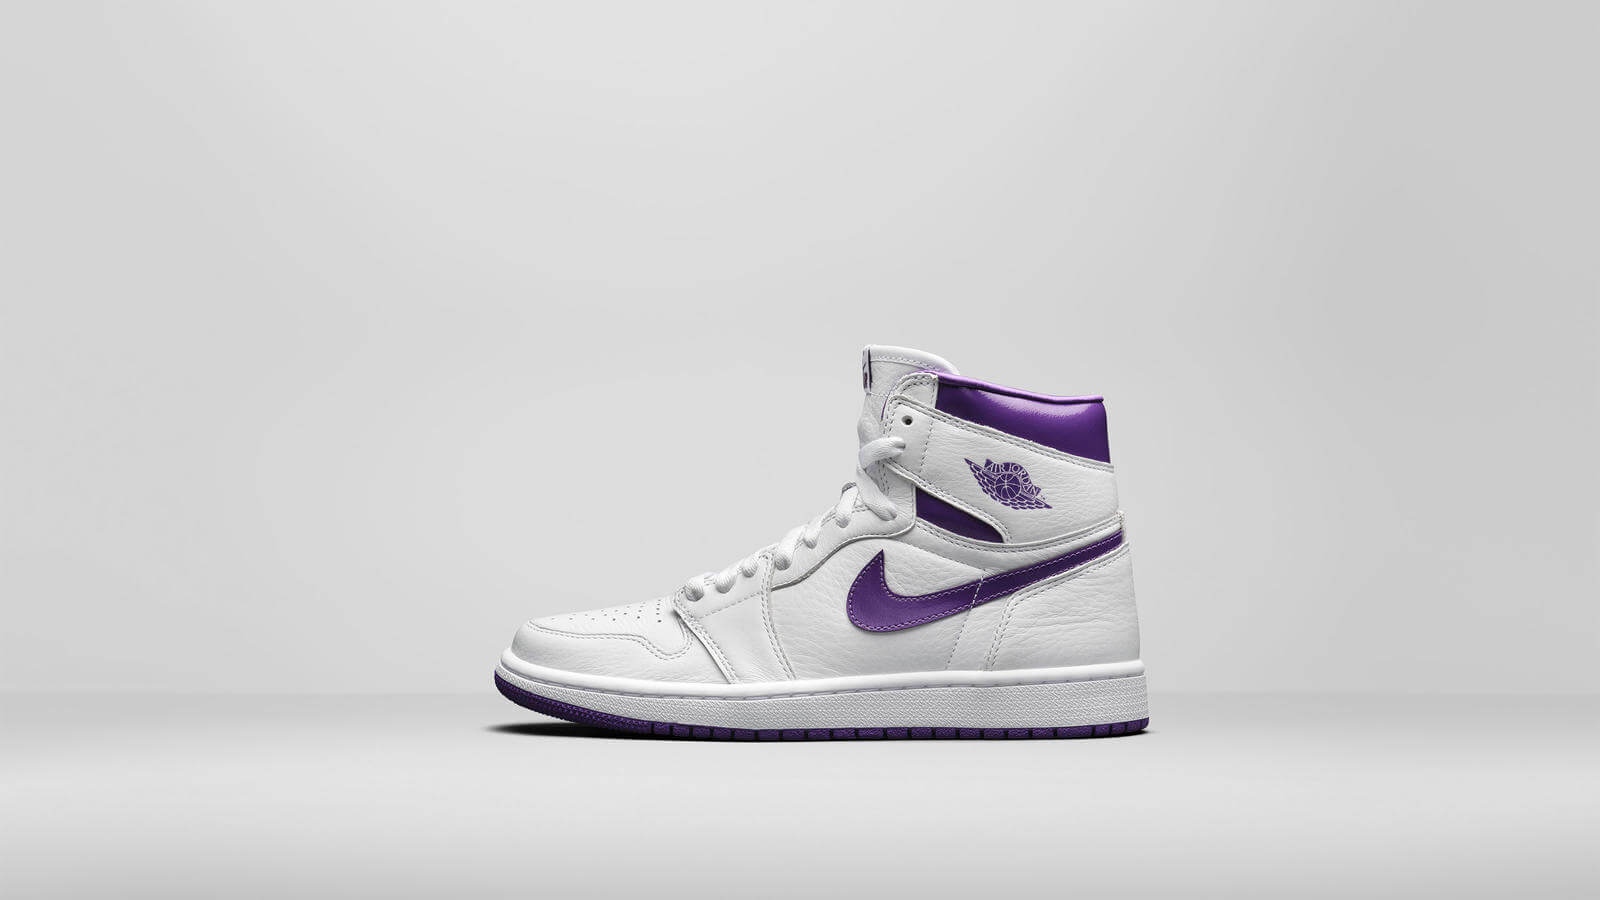 Zapatillas Air Jordan 1 HI OG Court Purple 2021 para mujer o chica